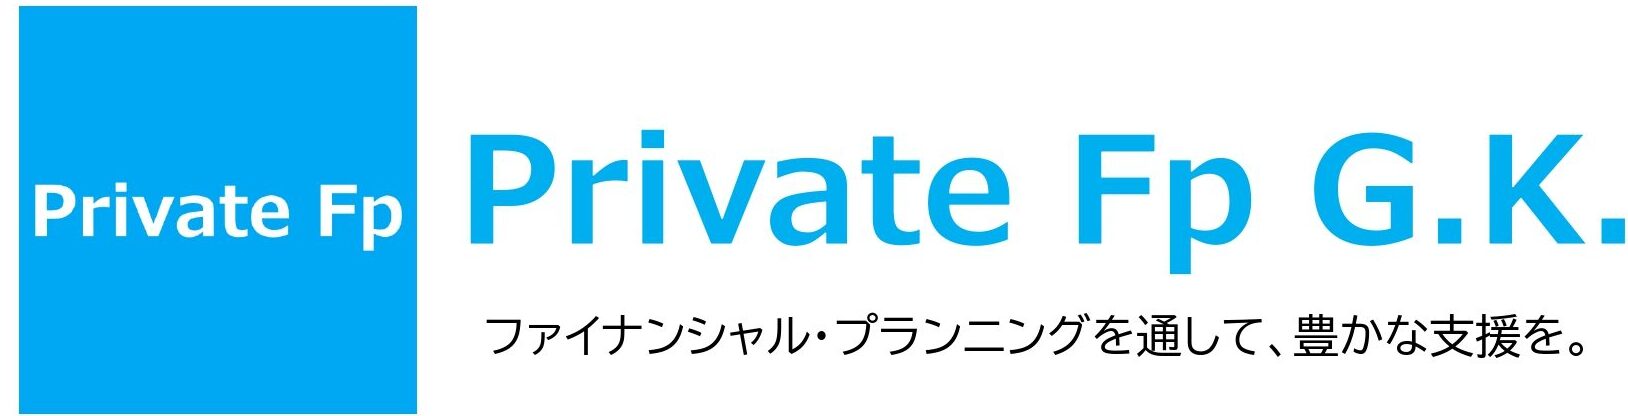 Private Fp